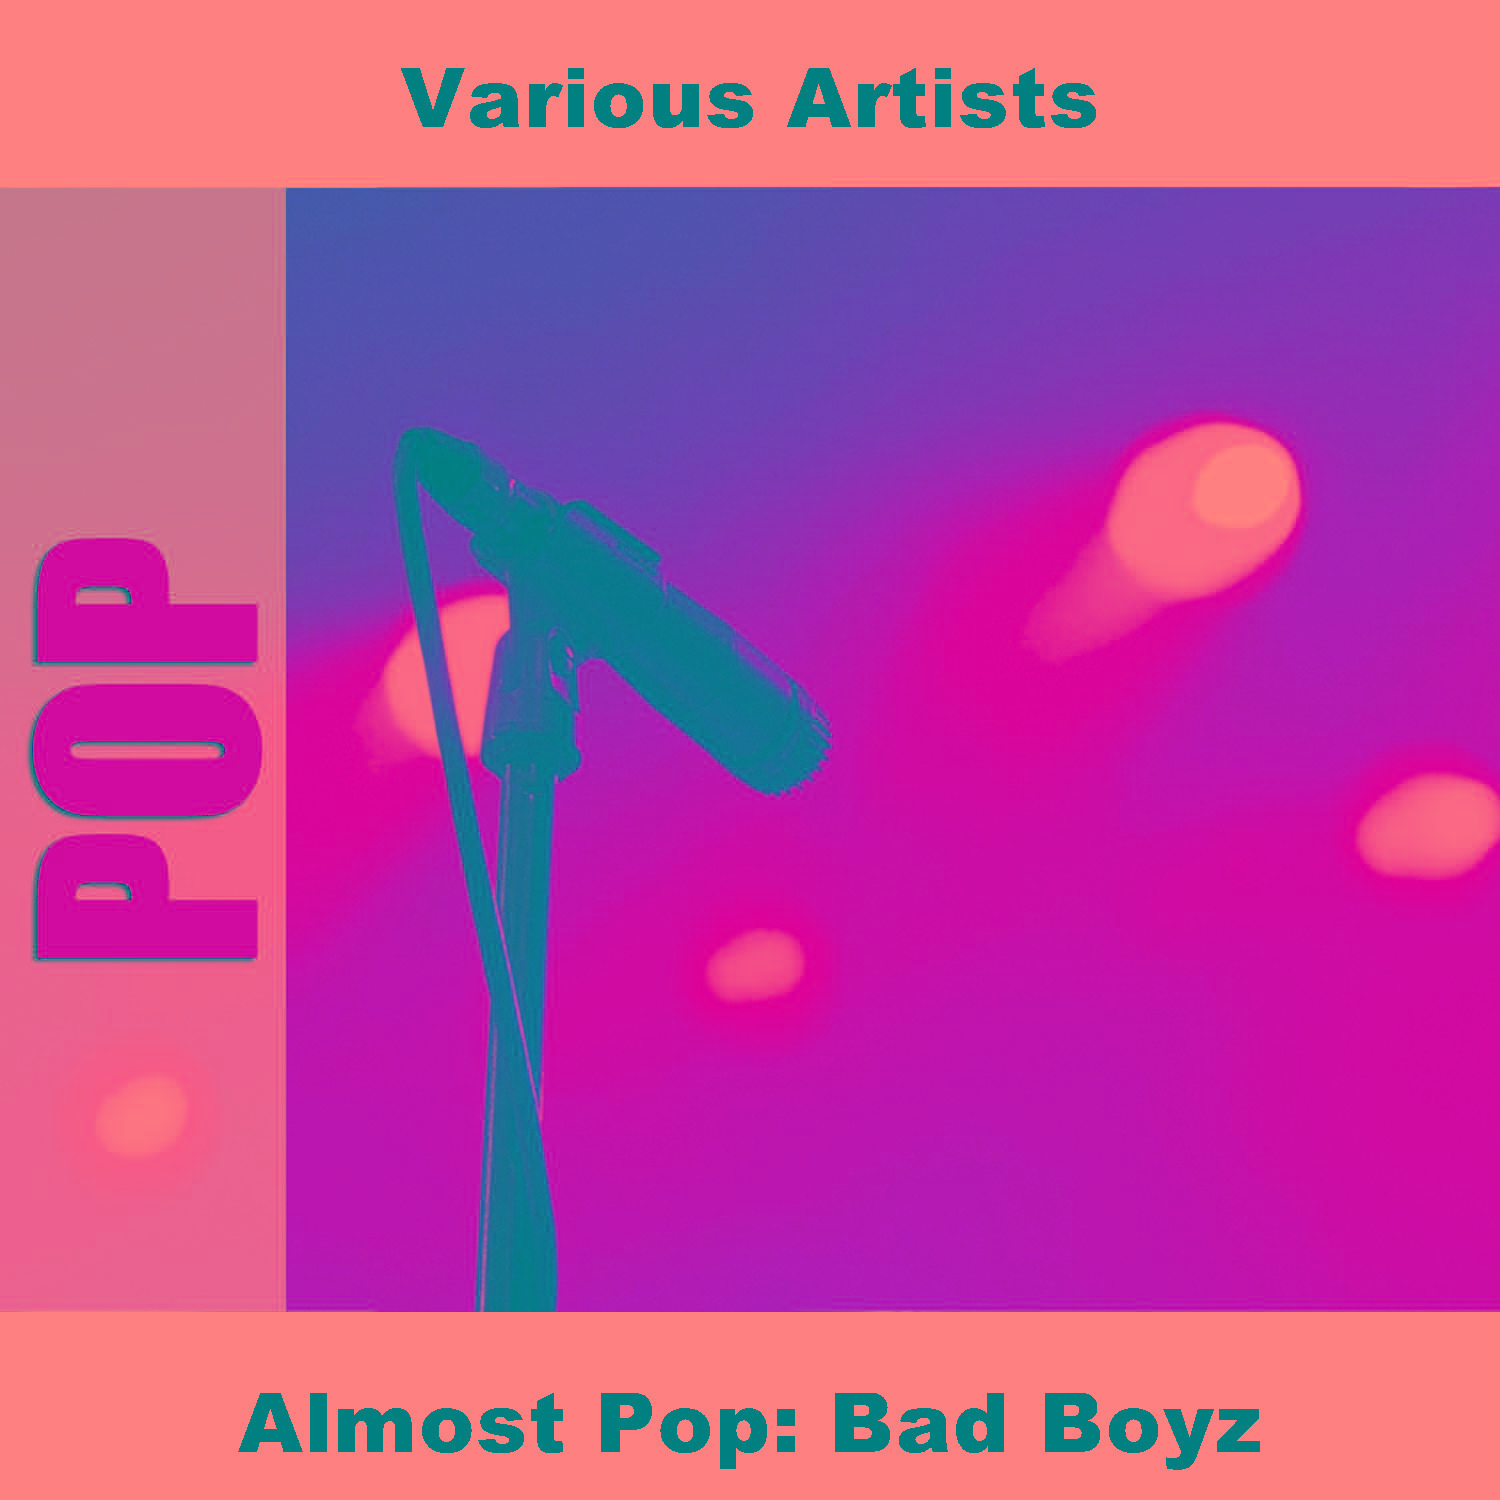 Almost Pop: Bad Boyz